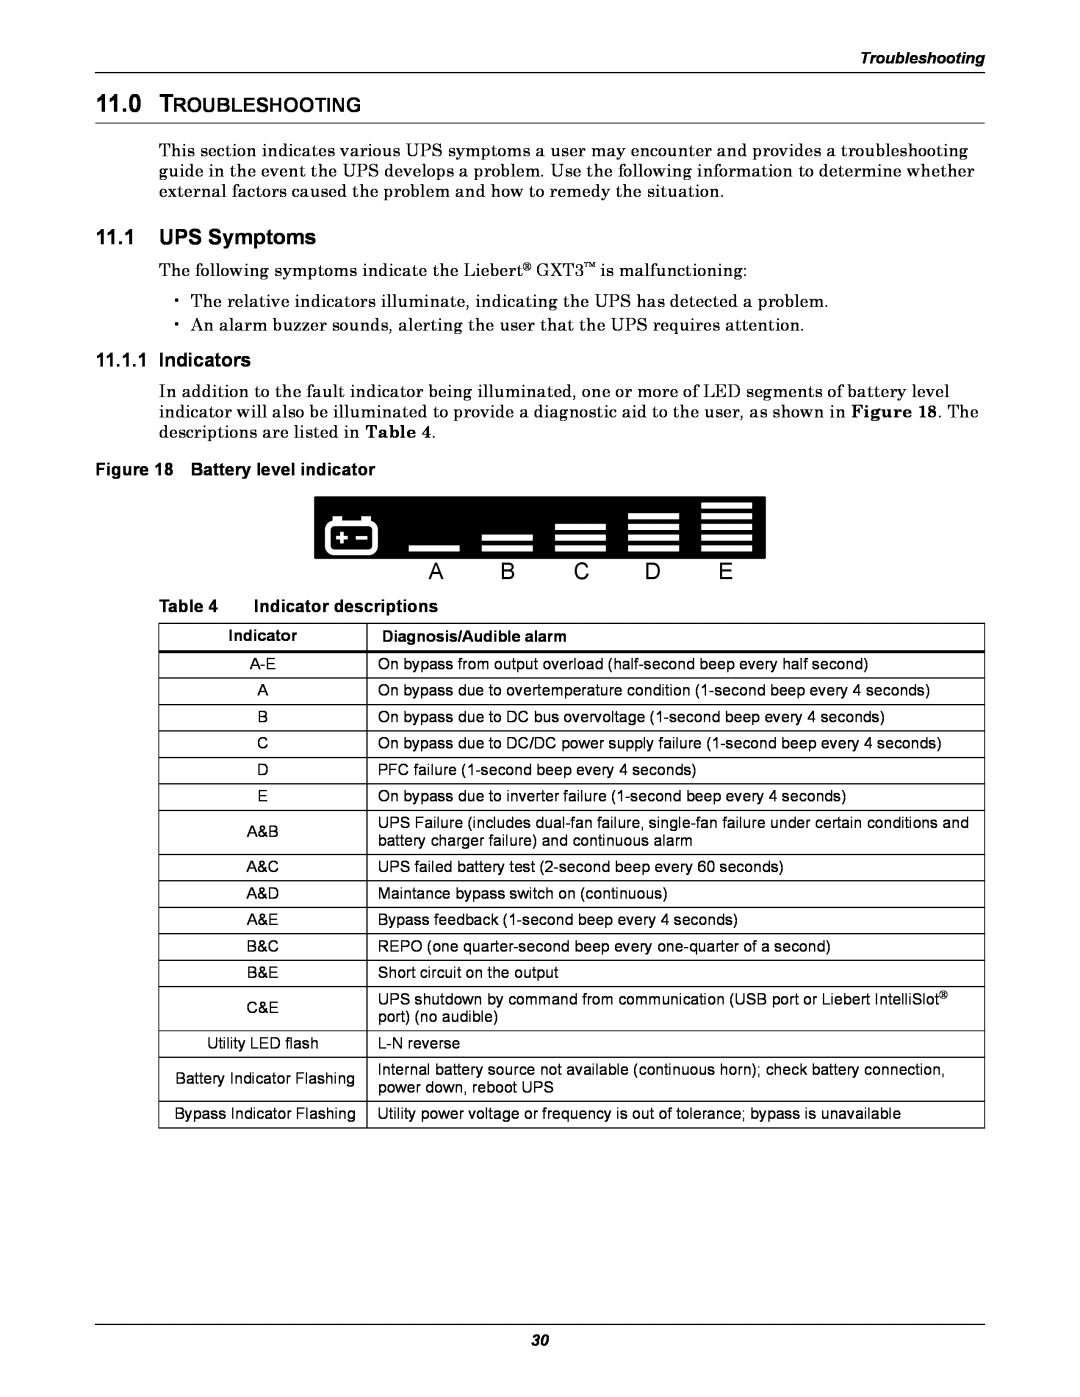 Emerson GXT3 230V user manual 11.0TROUBLESHOOTING, 11.1.1Indicators, Battery level indicator, Table, Indicator descriptions 